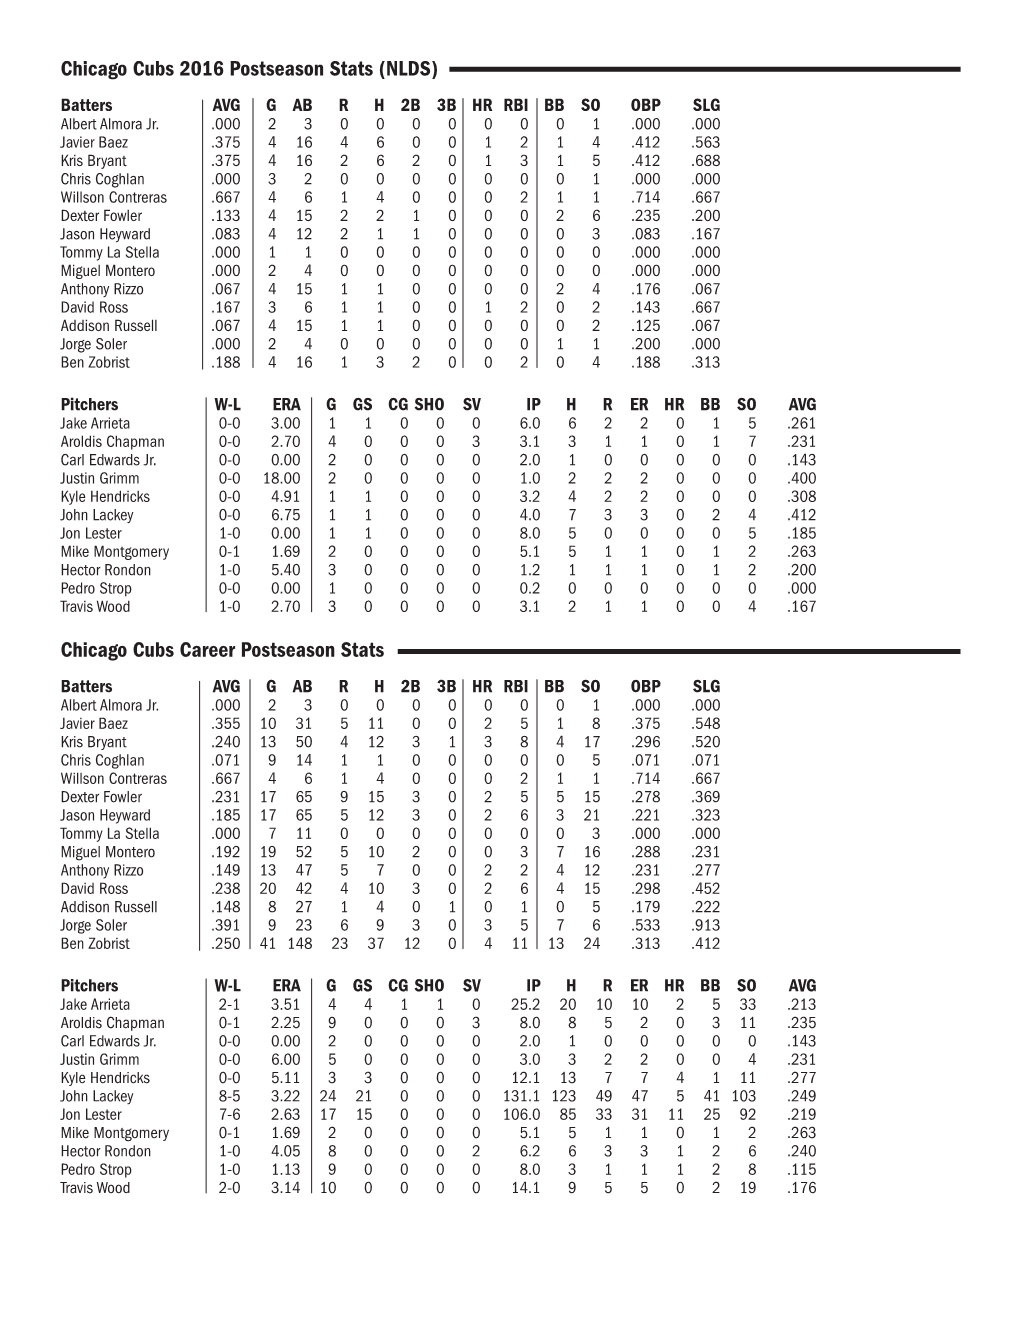 Chicago Cubs Career Postseason Stats Batters AVG G AB R H 2B 3B HR RBI BB SO OBP SLG Albert Almora Jr